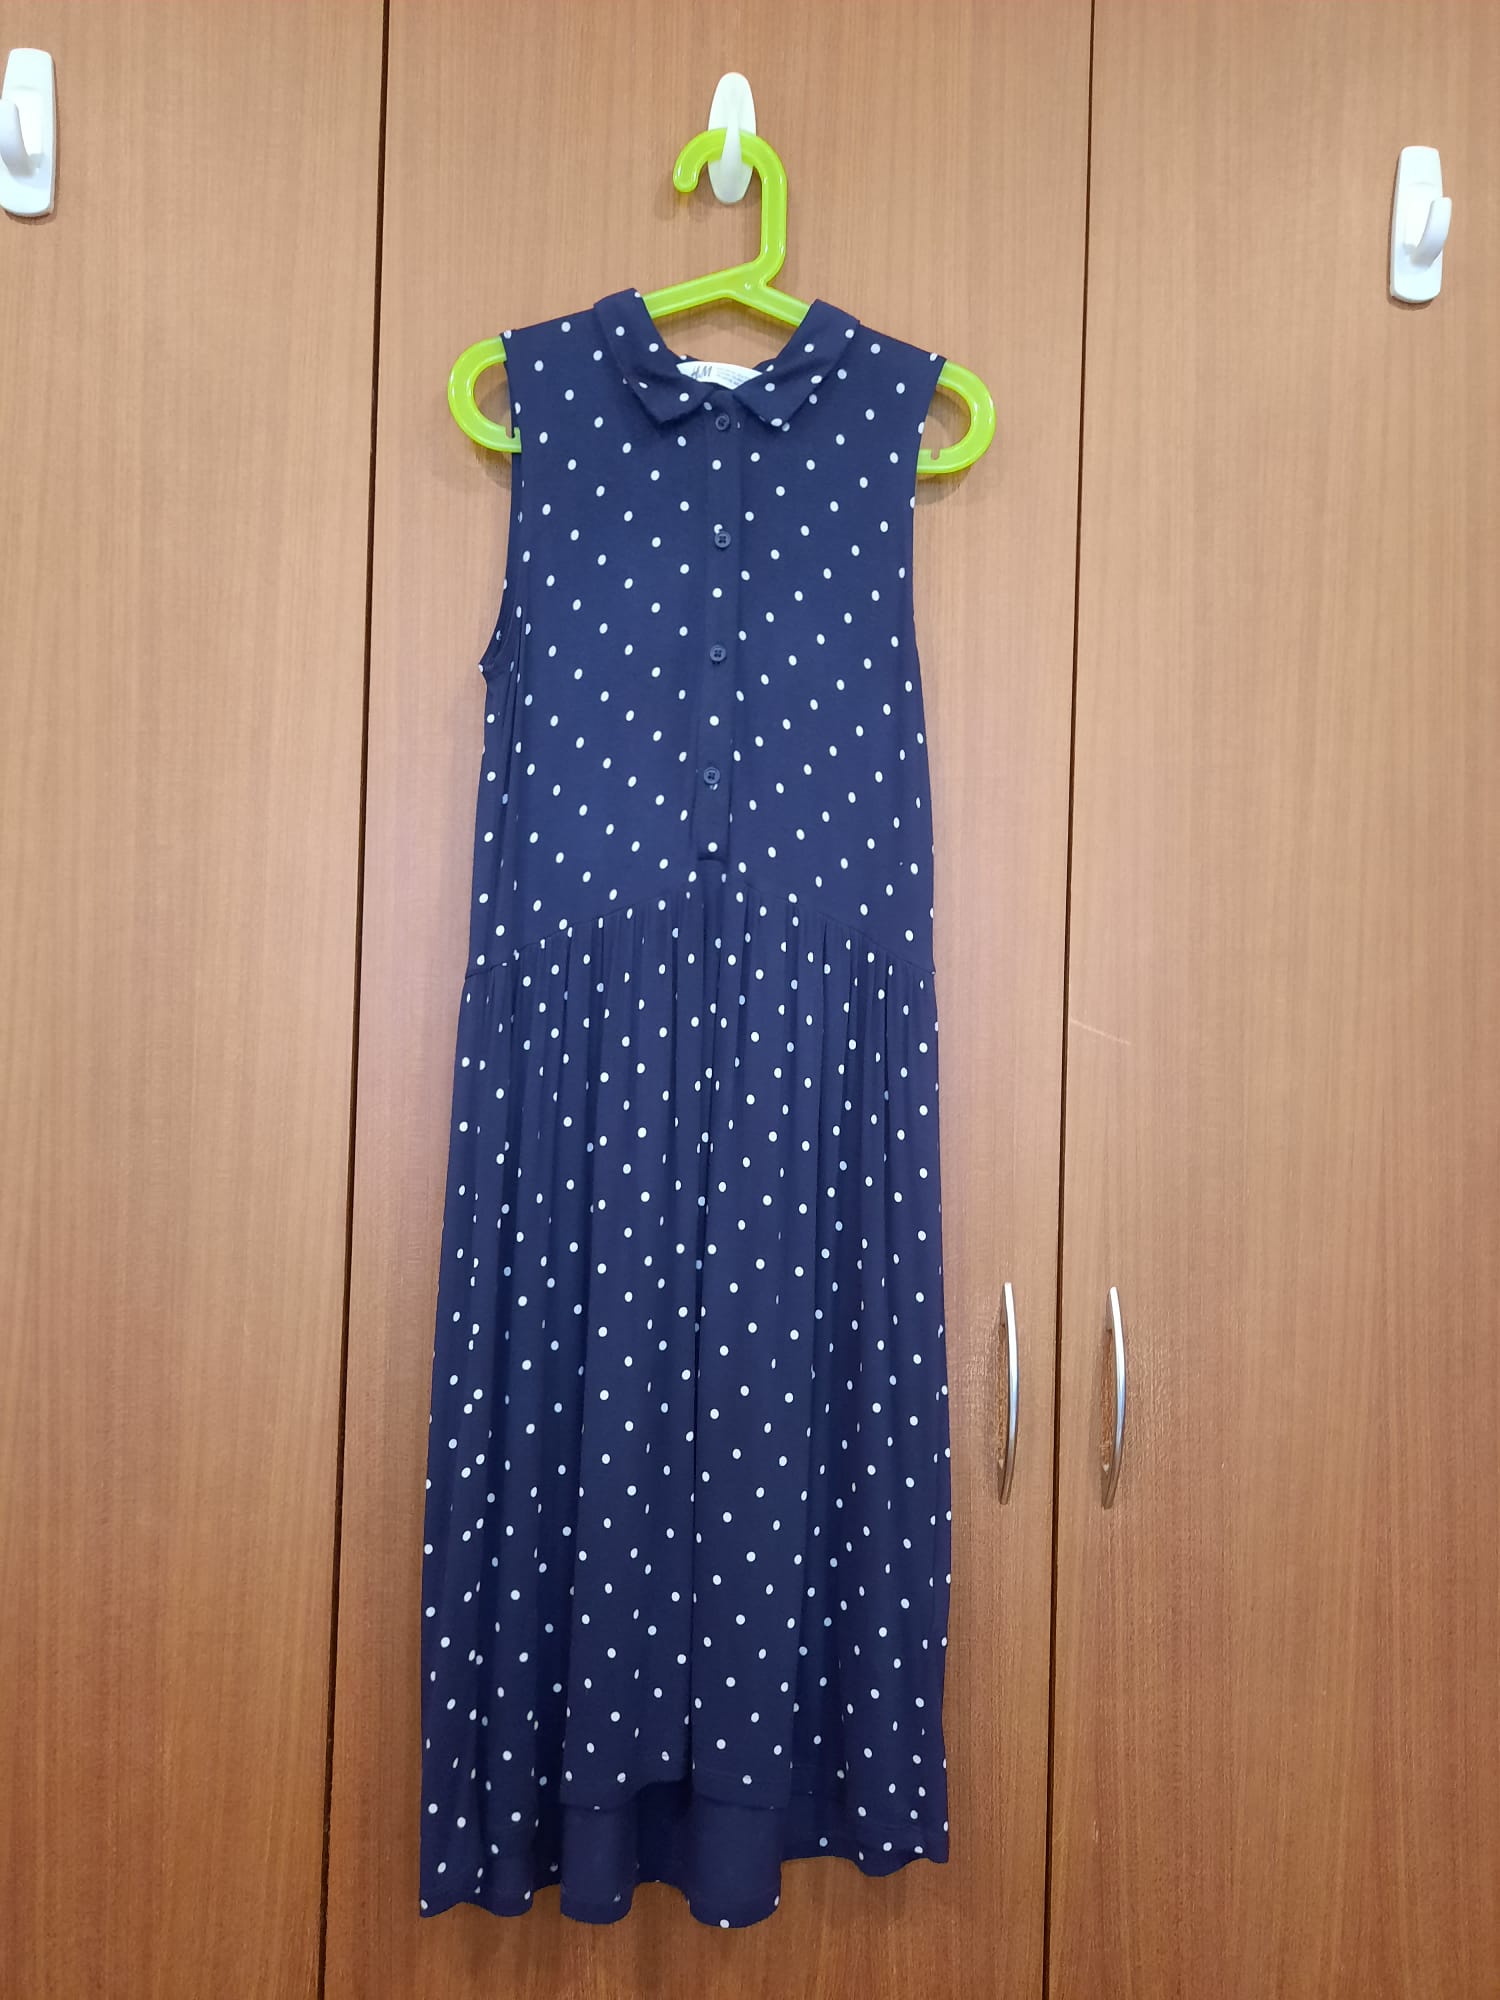 H&M polk-a-dot dress 1.jpeg